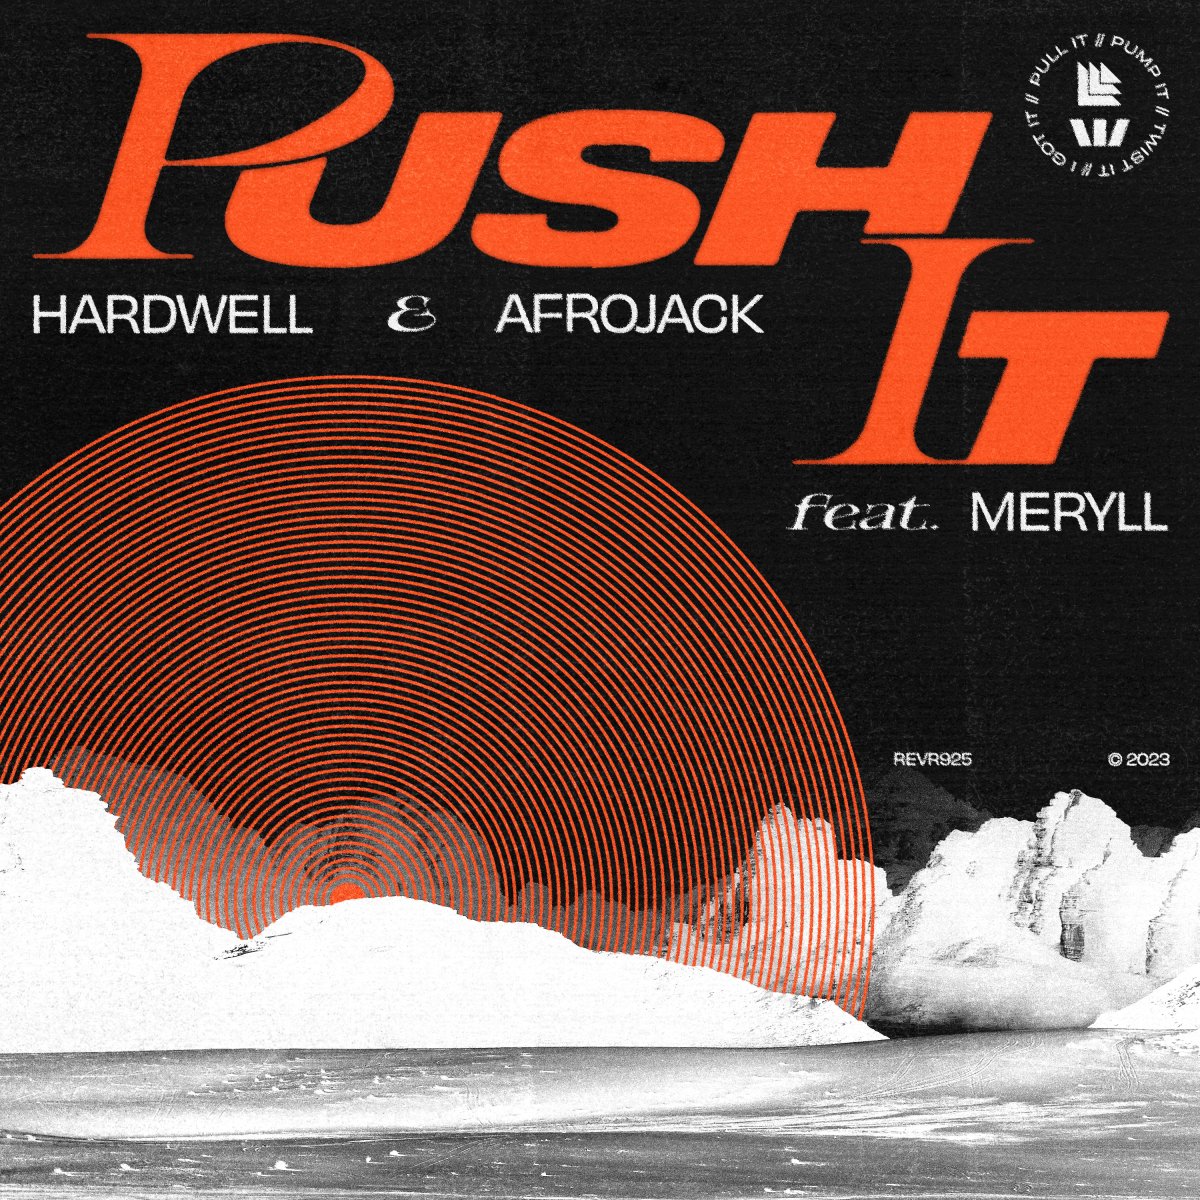 Push It – Hardwell & Afrojack feat. MERYLL